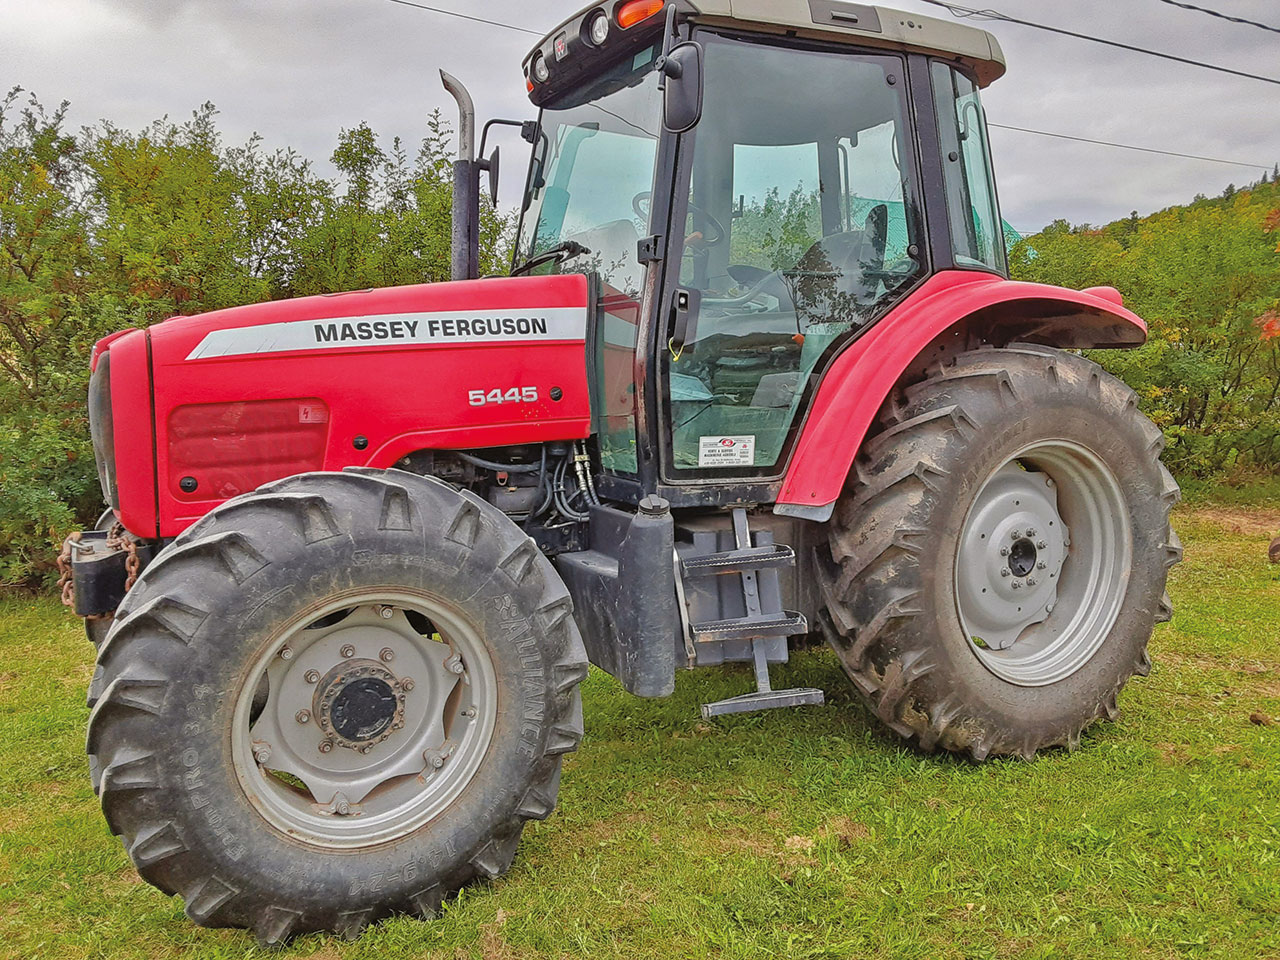 Tractor Massey Ferguson 5445